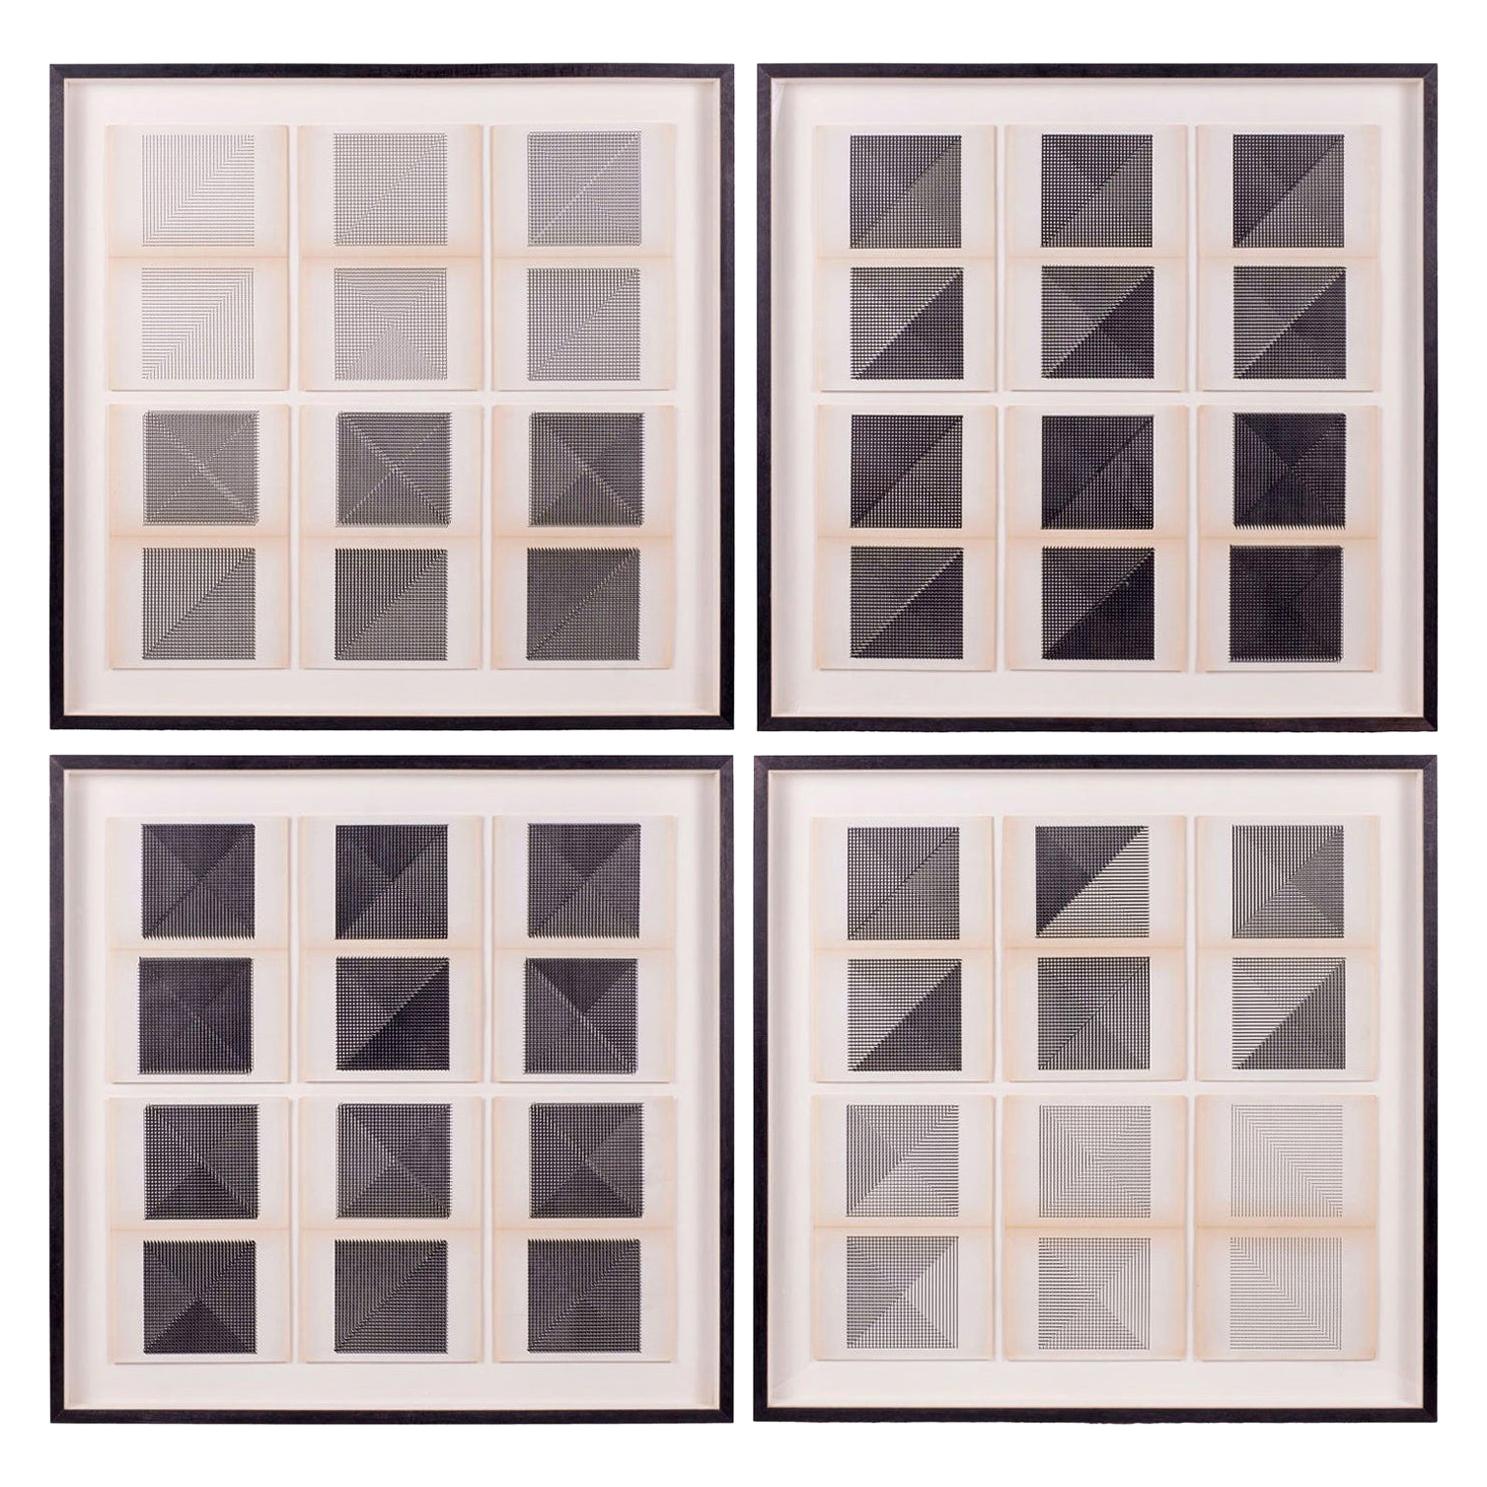 Original Framed Black and White Letterpress Prints by Dieter Roth